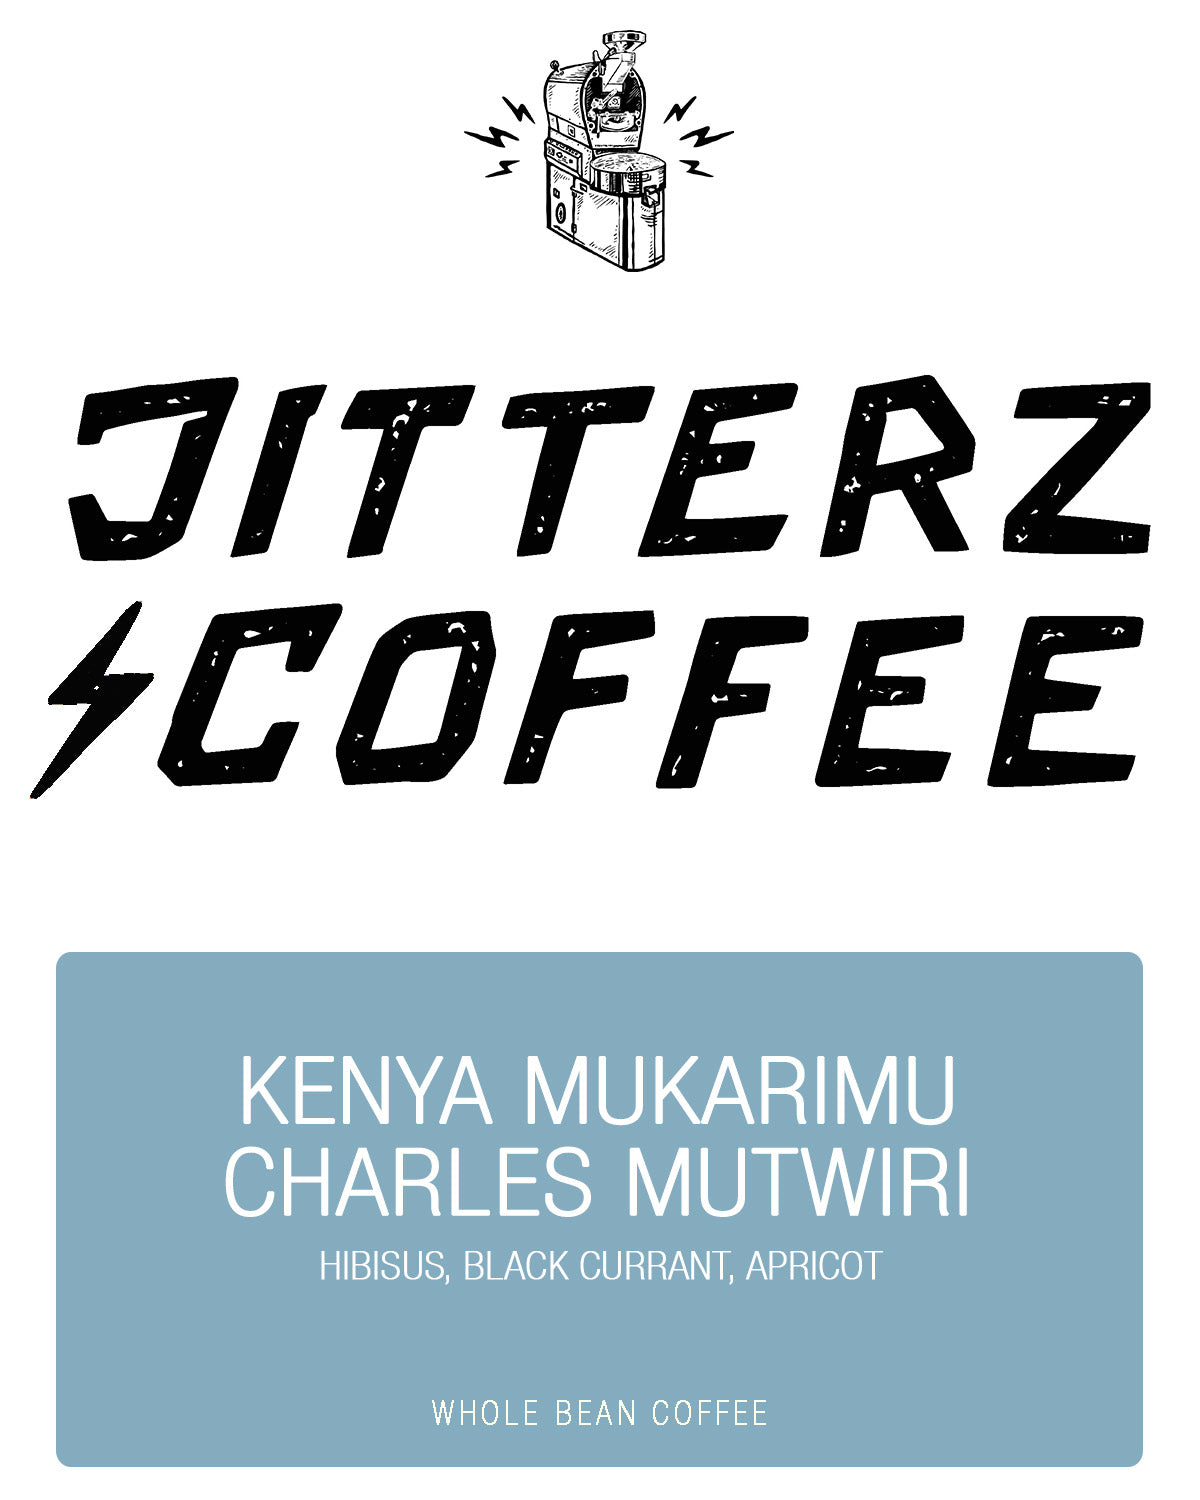 Kenya, Mukarimu, Charles Mutwiri